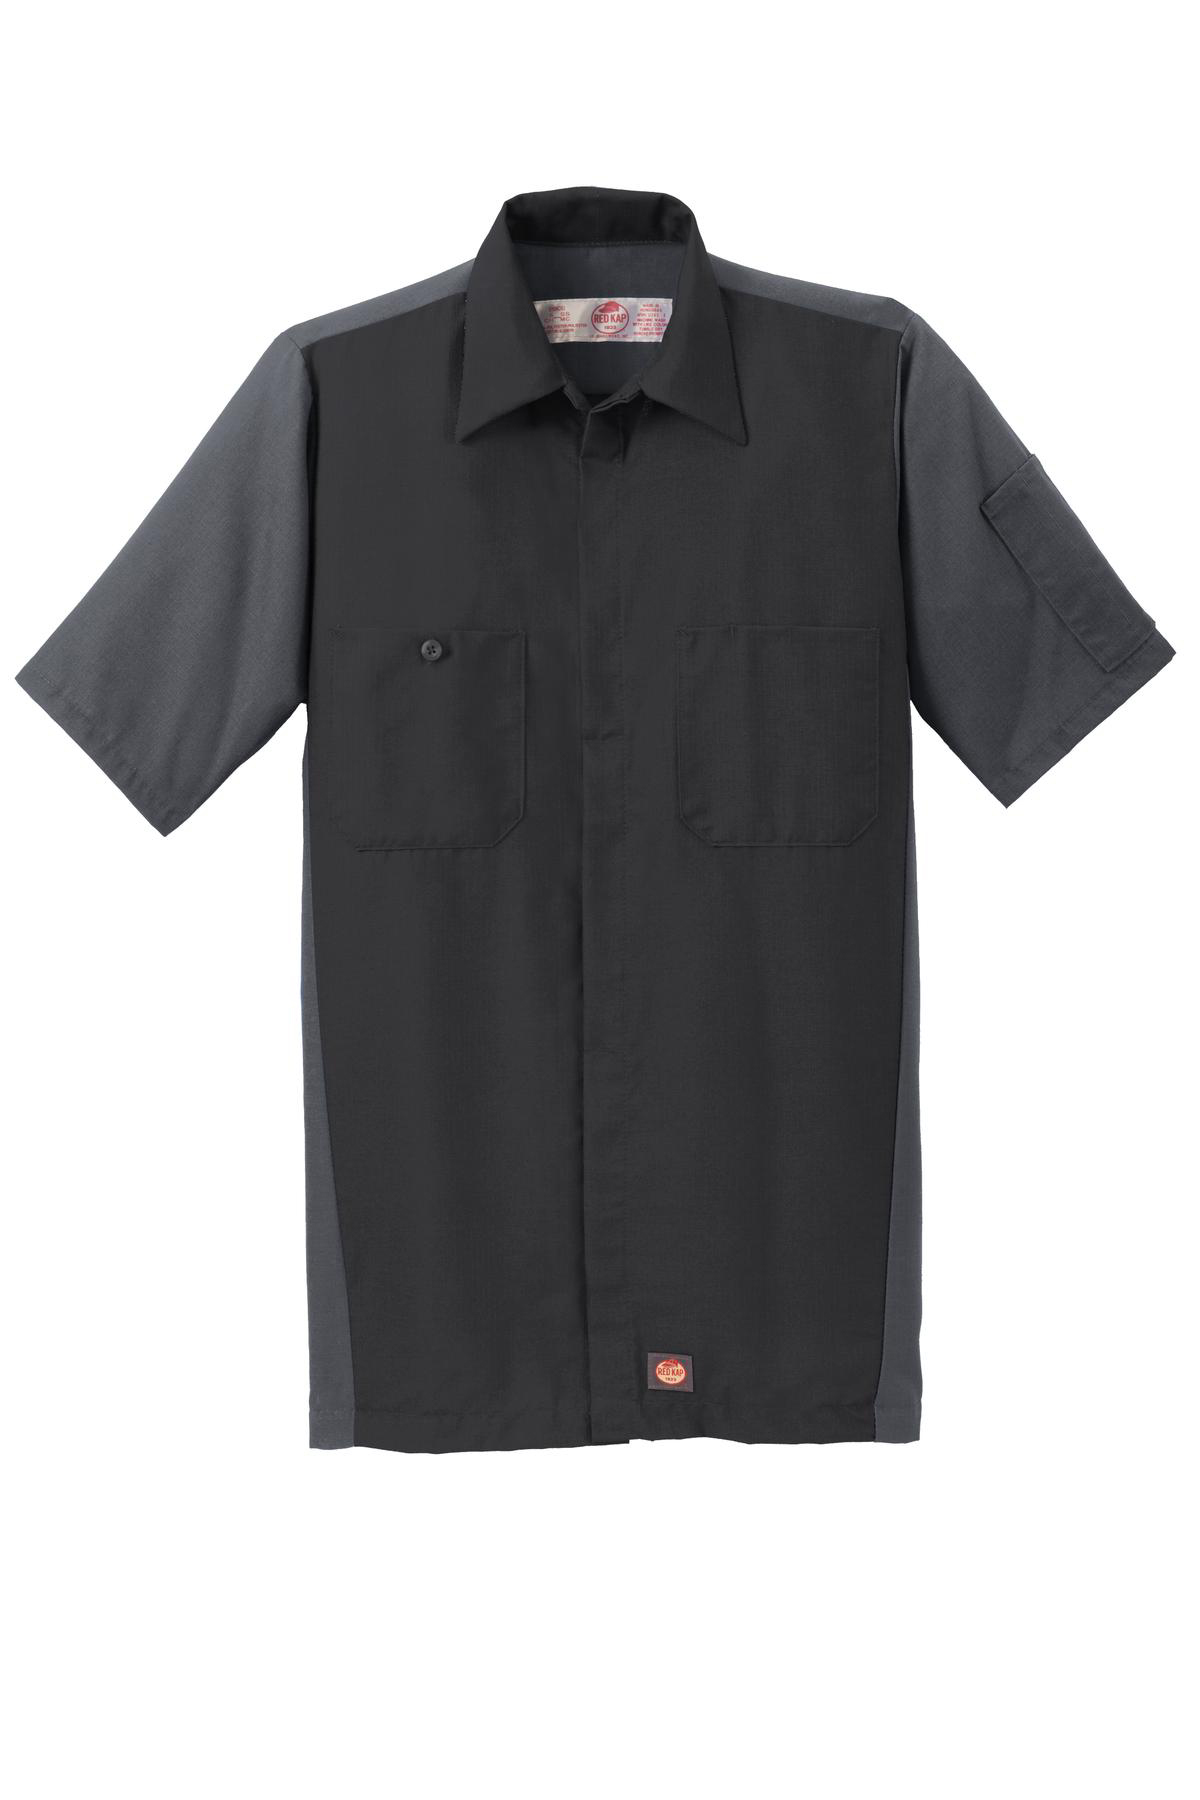 Red Kap Short Sleeve Ripstop Crew Shirt | Product | SanMar